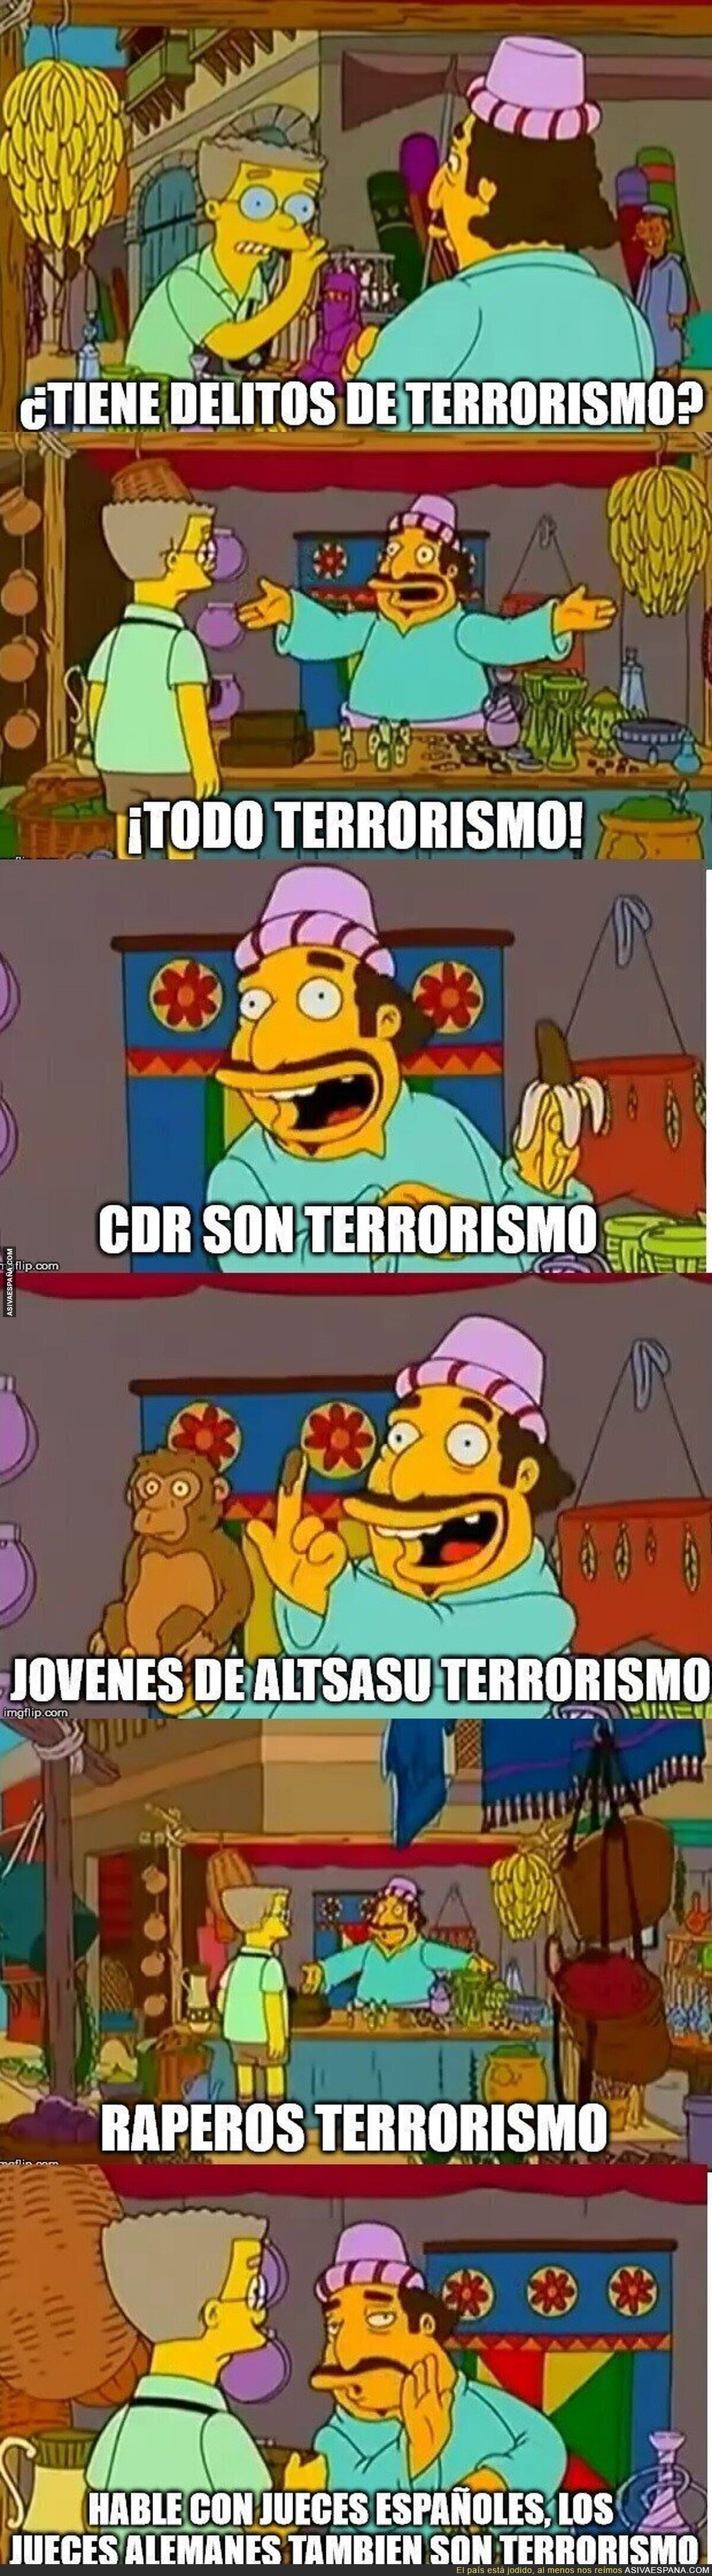 ¡Todo terrorismo!